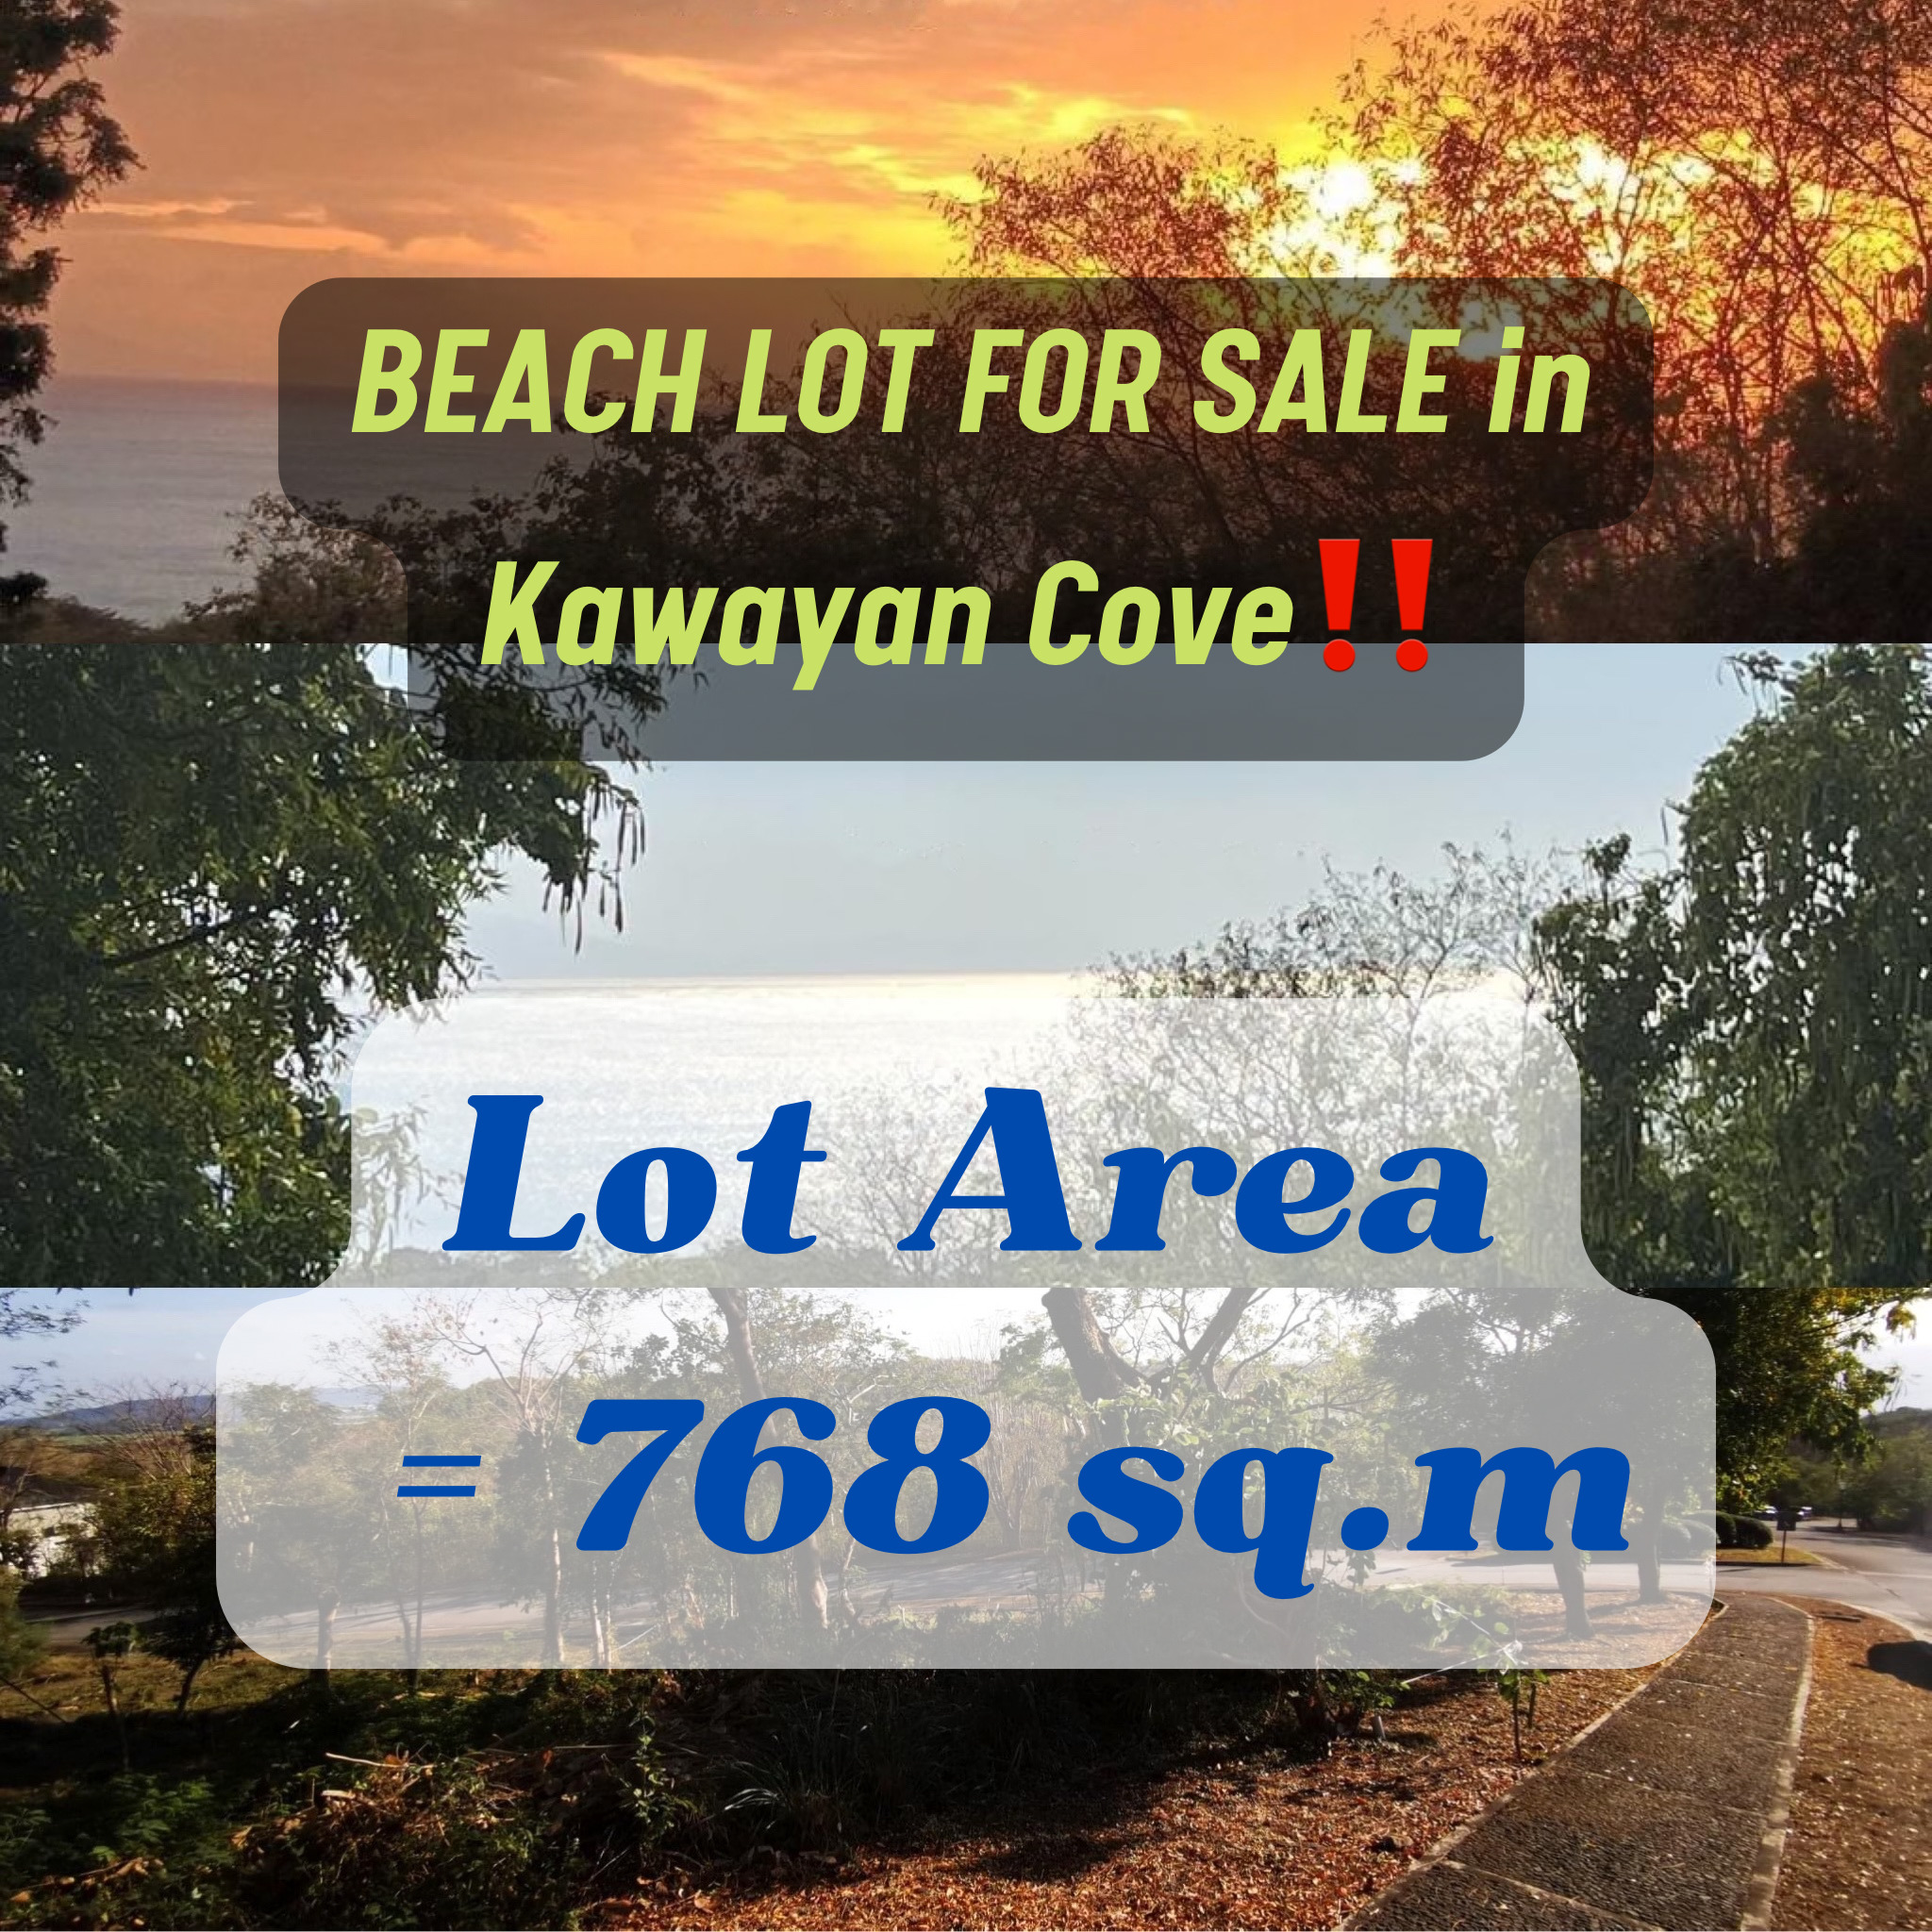 BEACH LOT FOR SALE in Kawayan Cove‼️